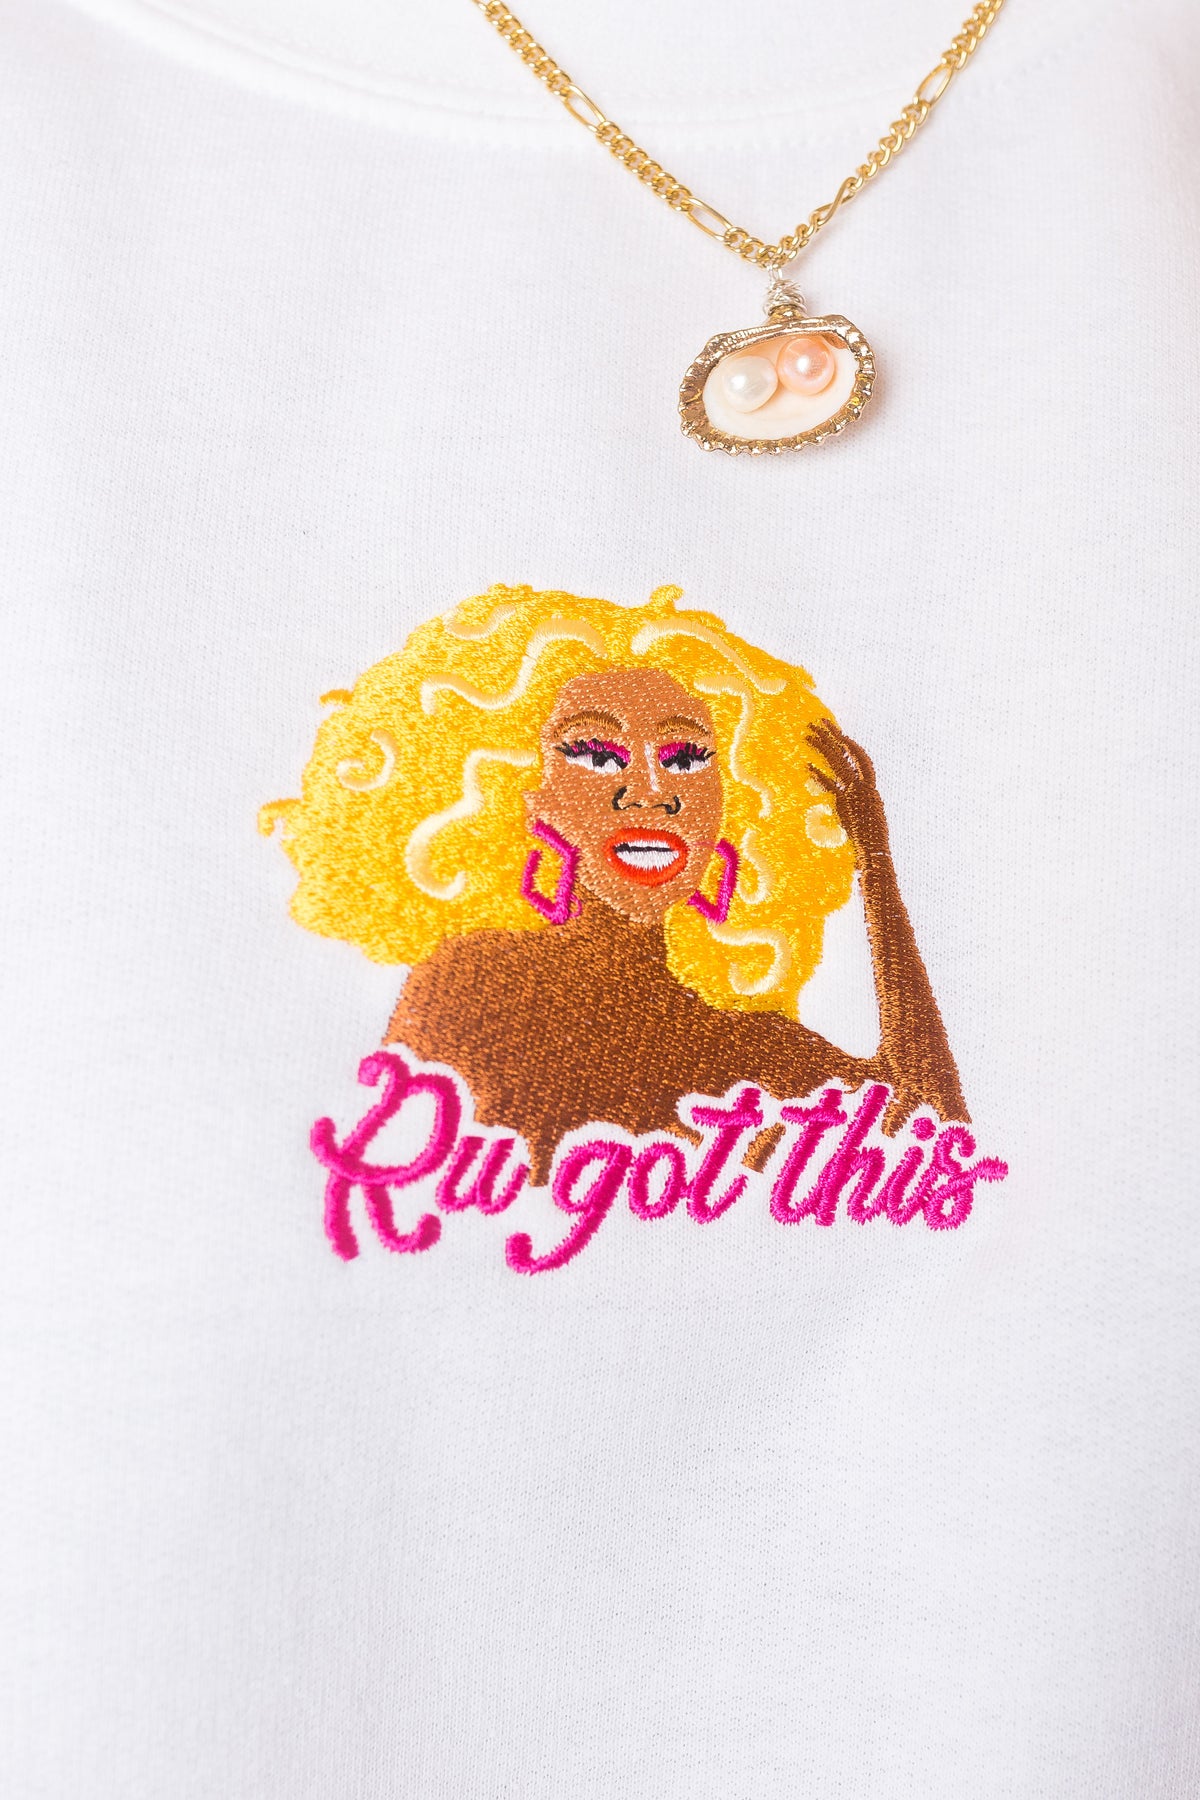 Ru Paul &#39;Ru Got This&#39; Embroidered Sweatshirt